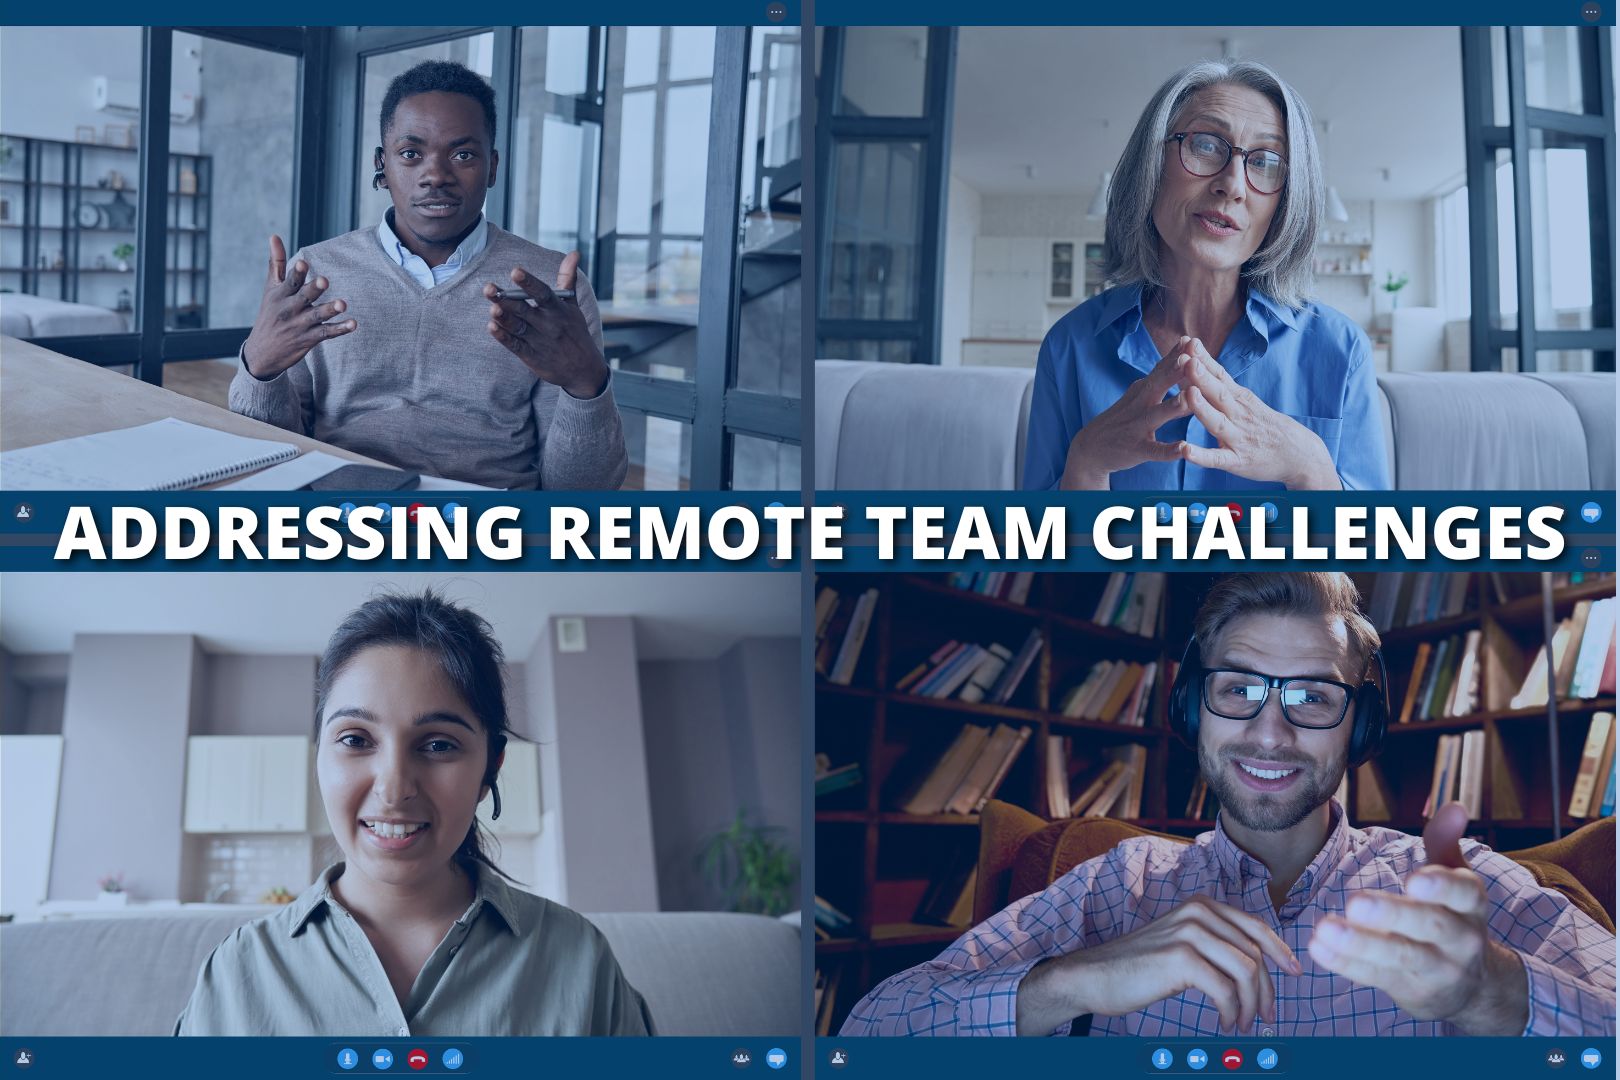 5 simple ways to address remote team challenges